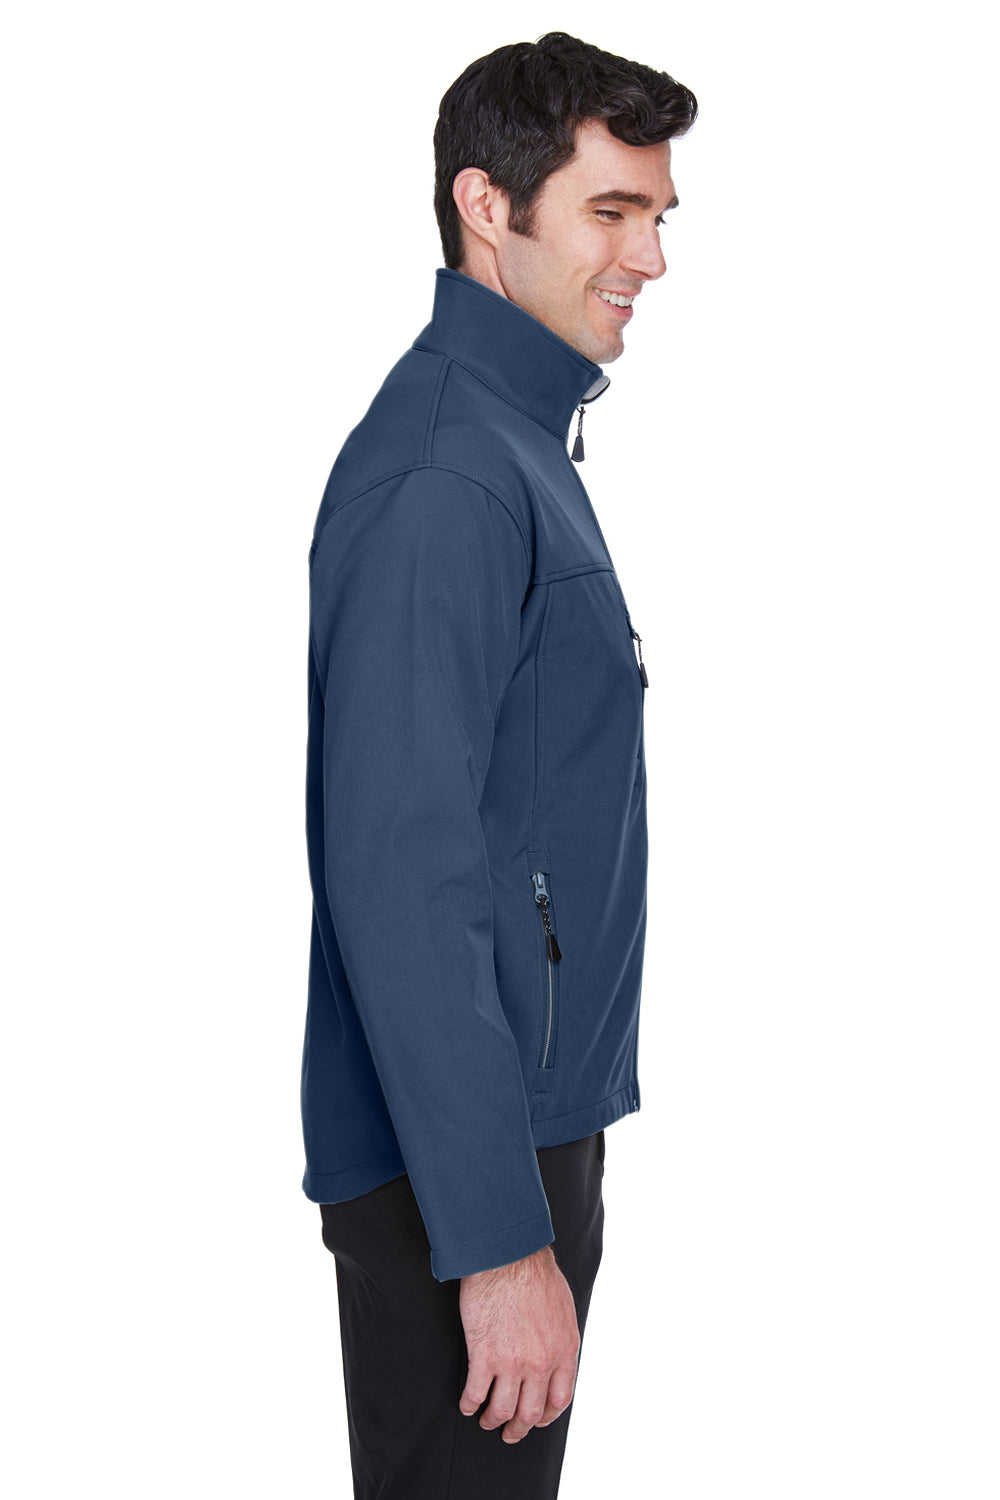 Devon & Jones D995 Mens Wind & Water Resistant Full Zip Jacket Navy Blue Side